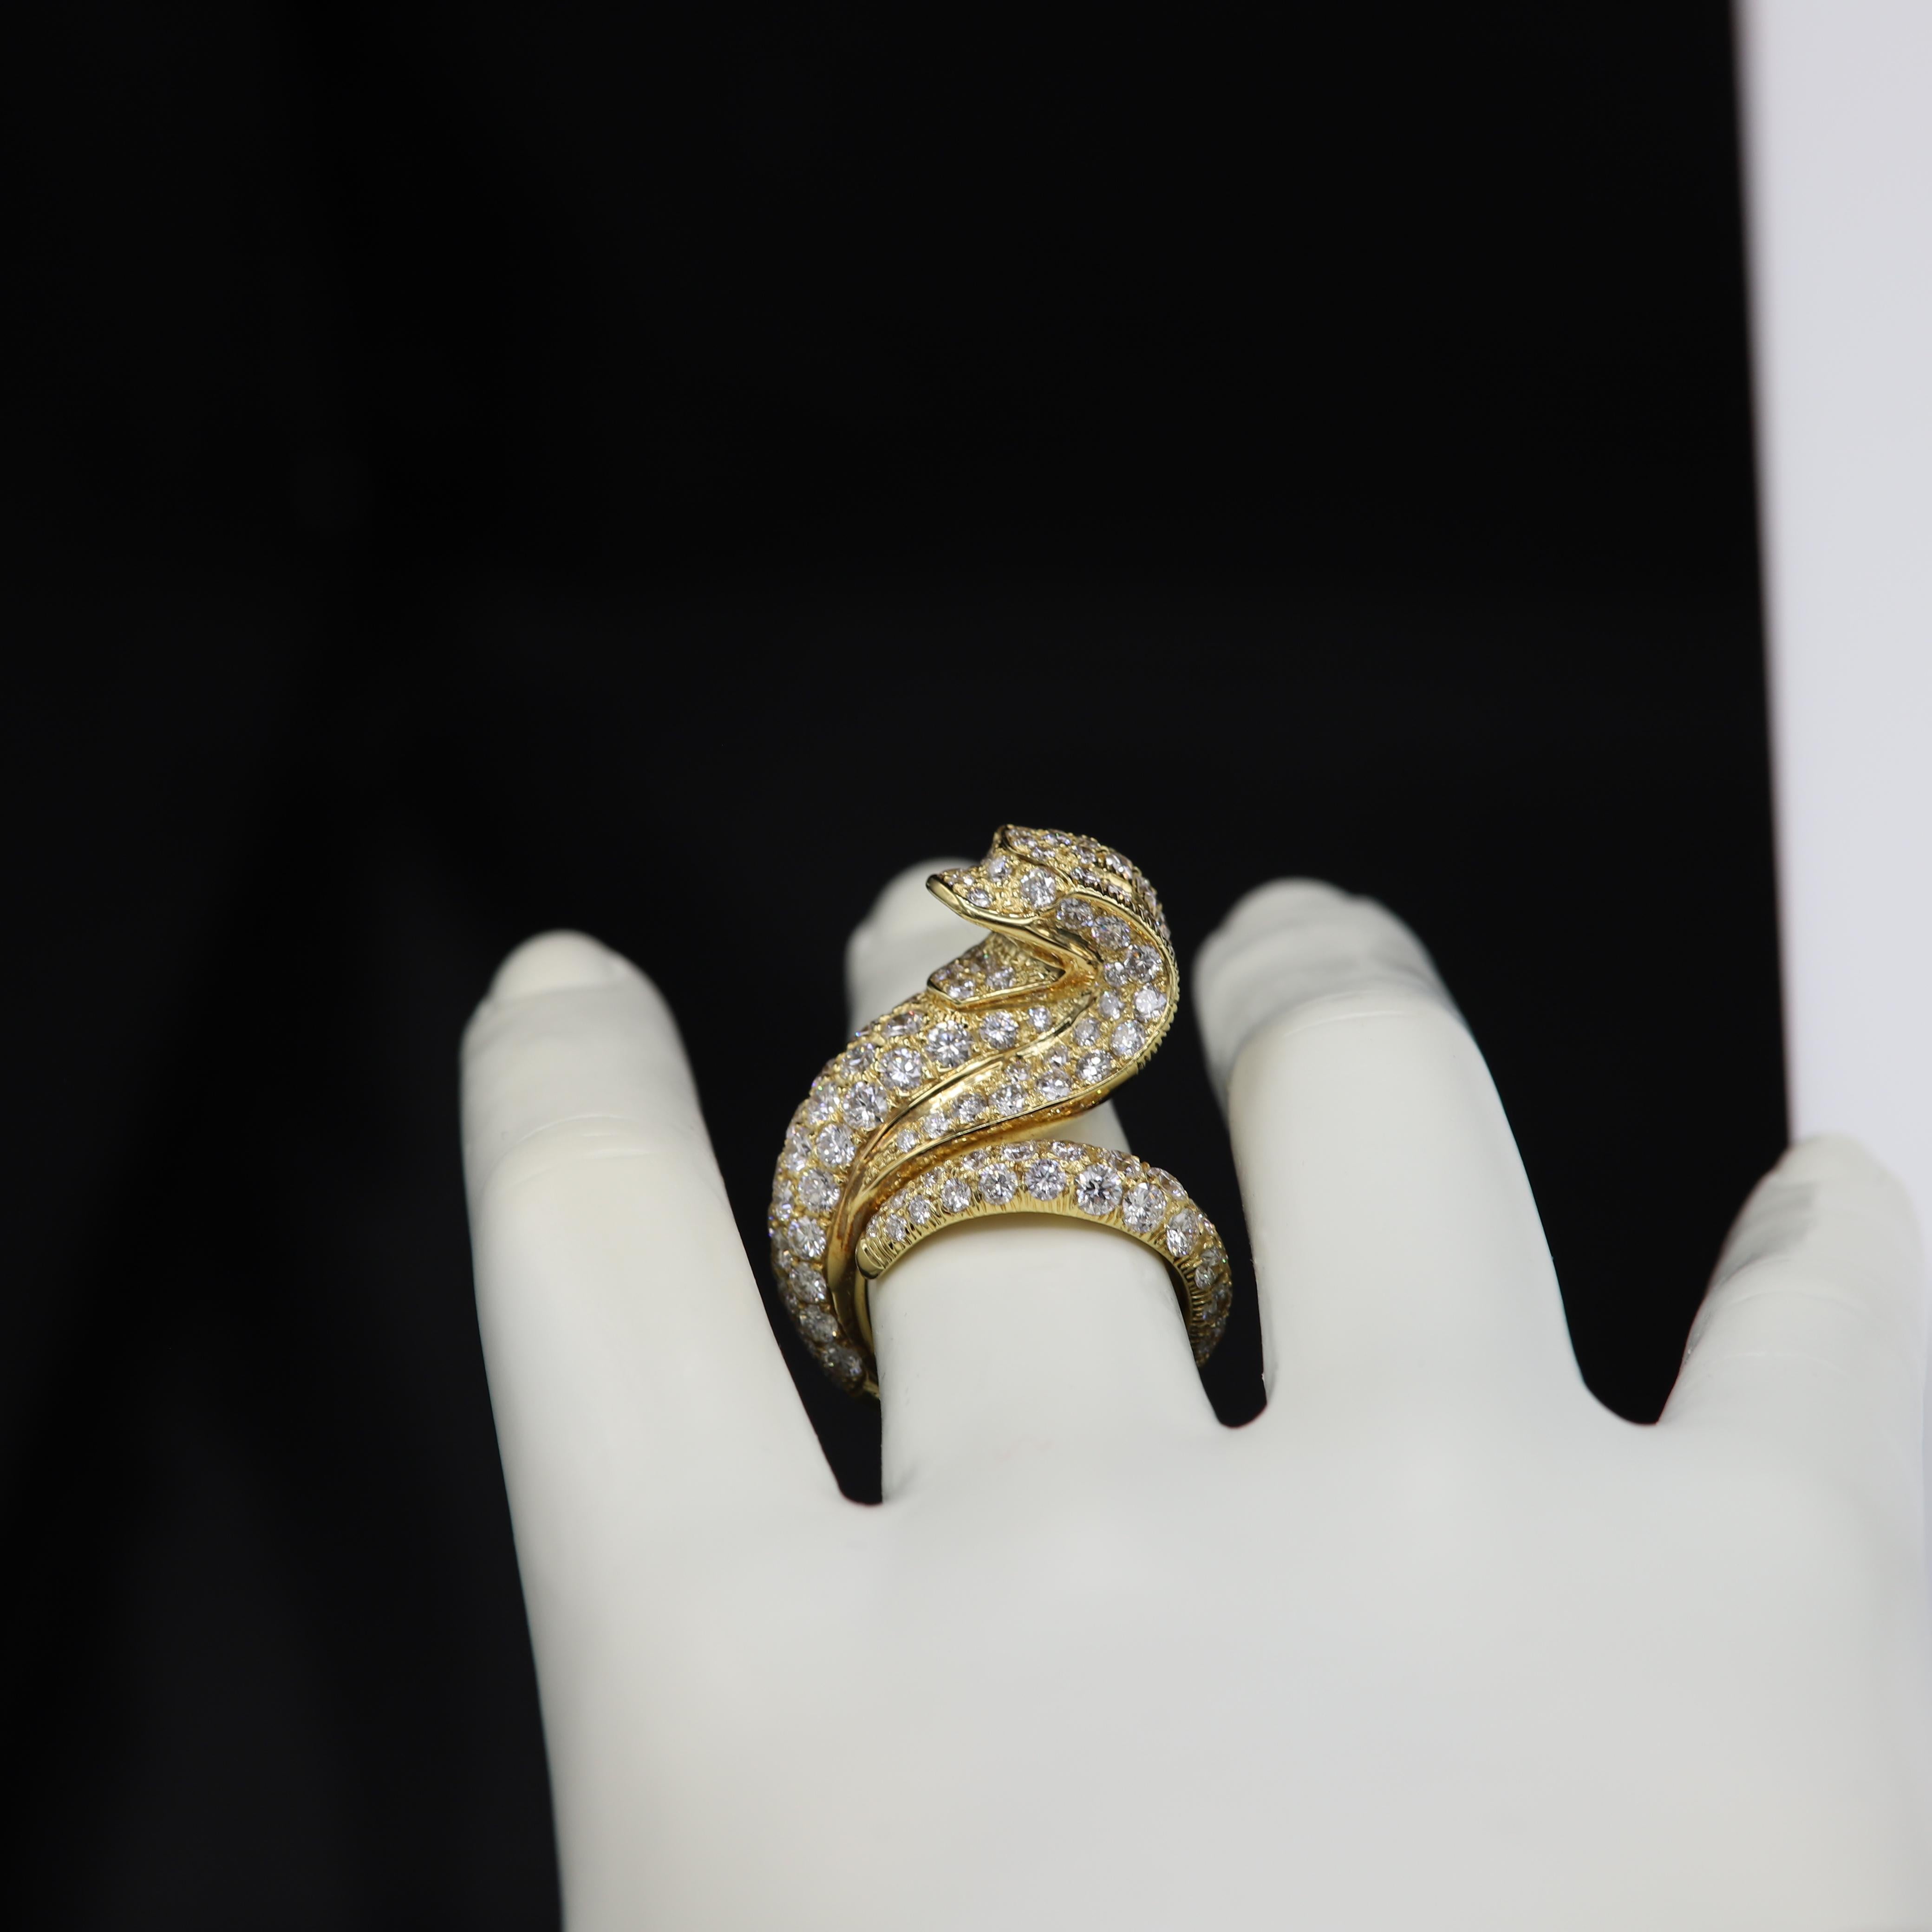 Gold & Diamond Snake Ring
18k yellow gold 24.60 grams
Diamonds 7.92 carat G-VS
finger size 7 (cannot resize)